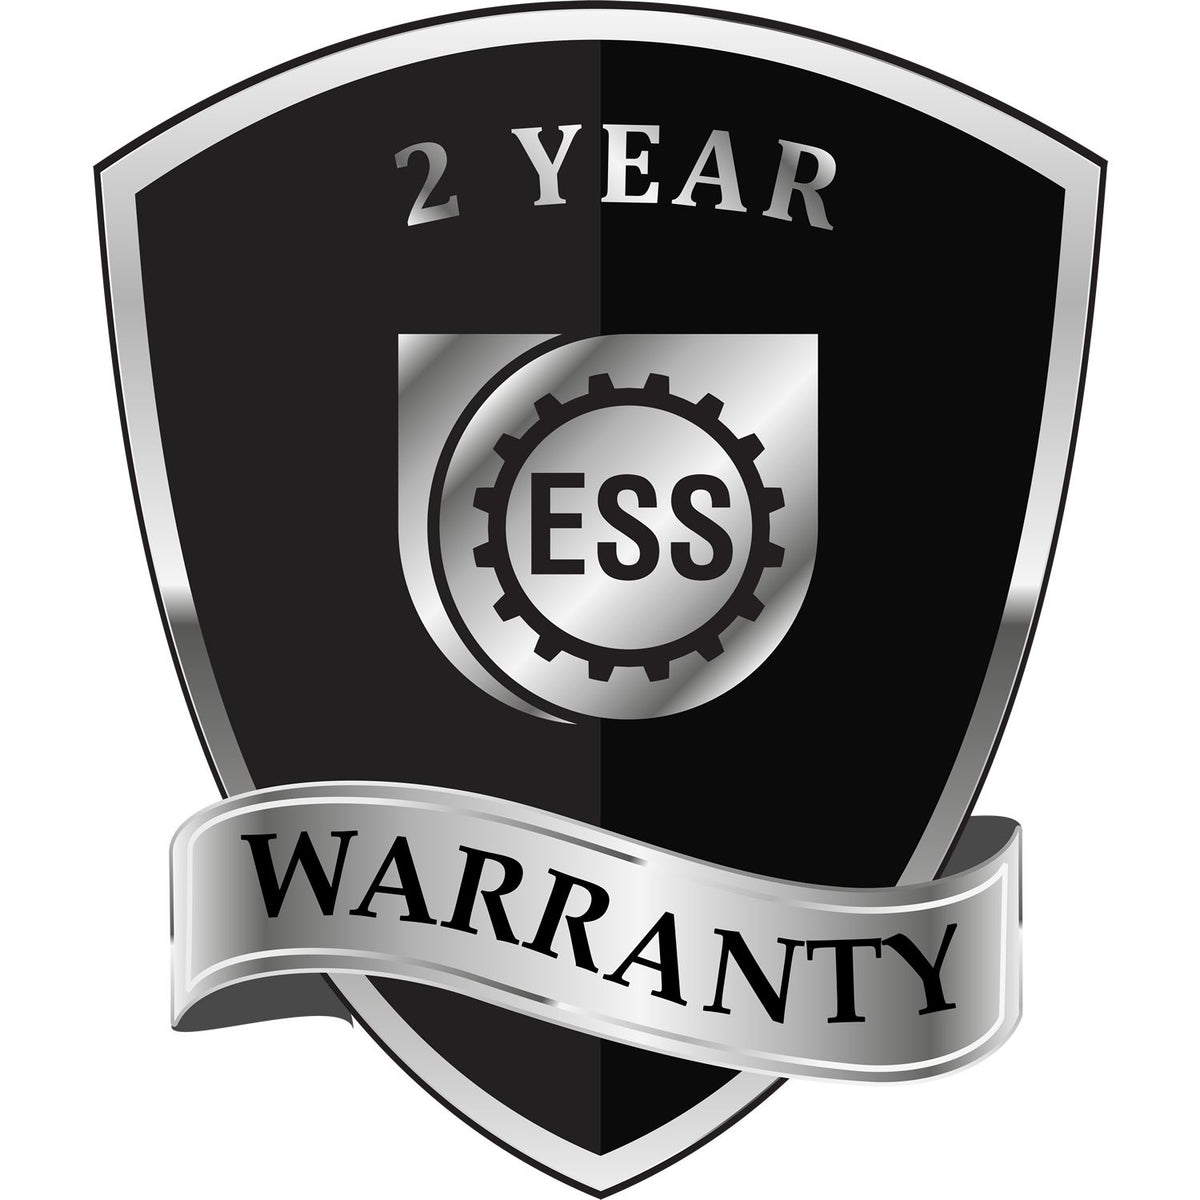 A black and silver badge or emblem showing warranty information for the Gift South Dakota Land Surveyor Seal